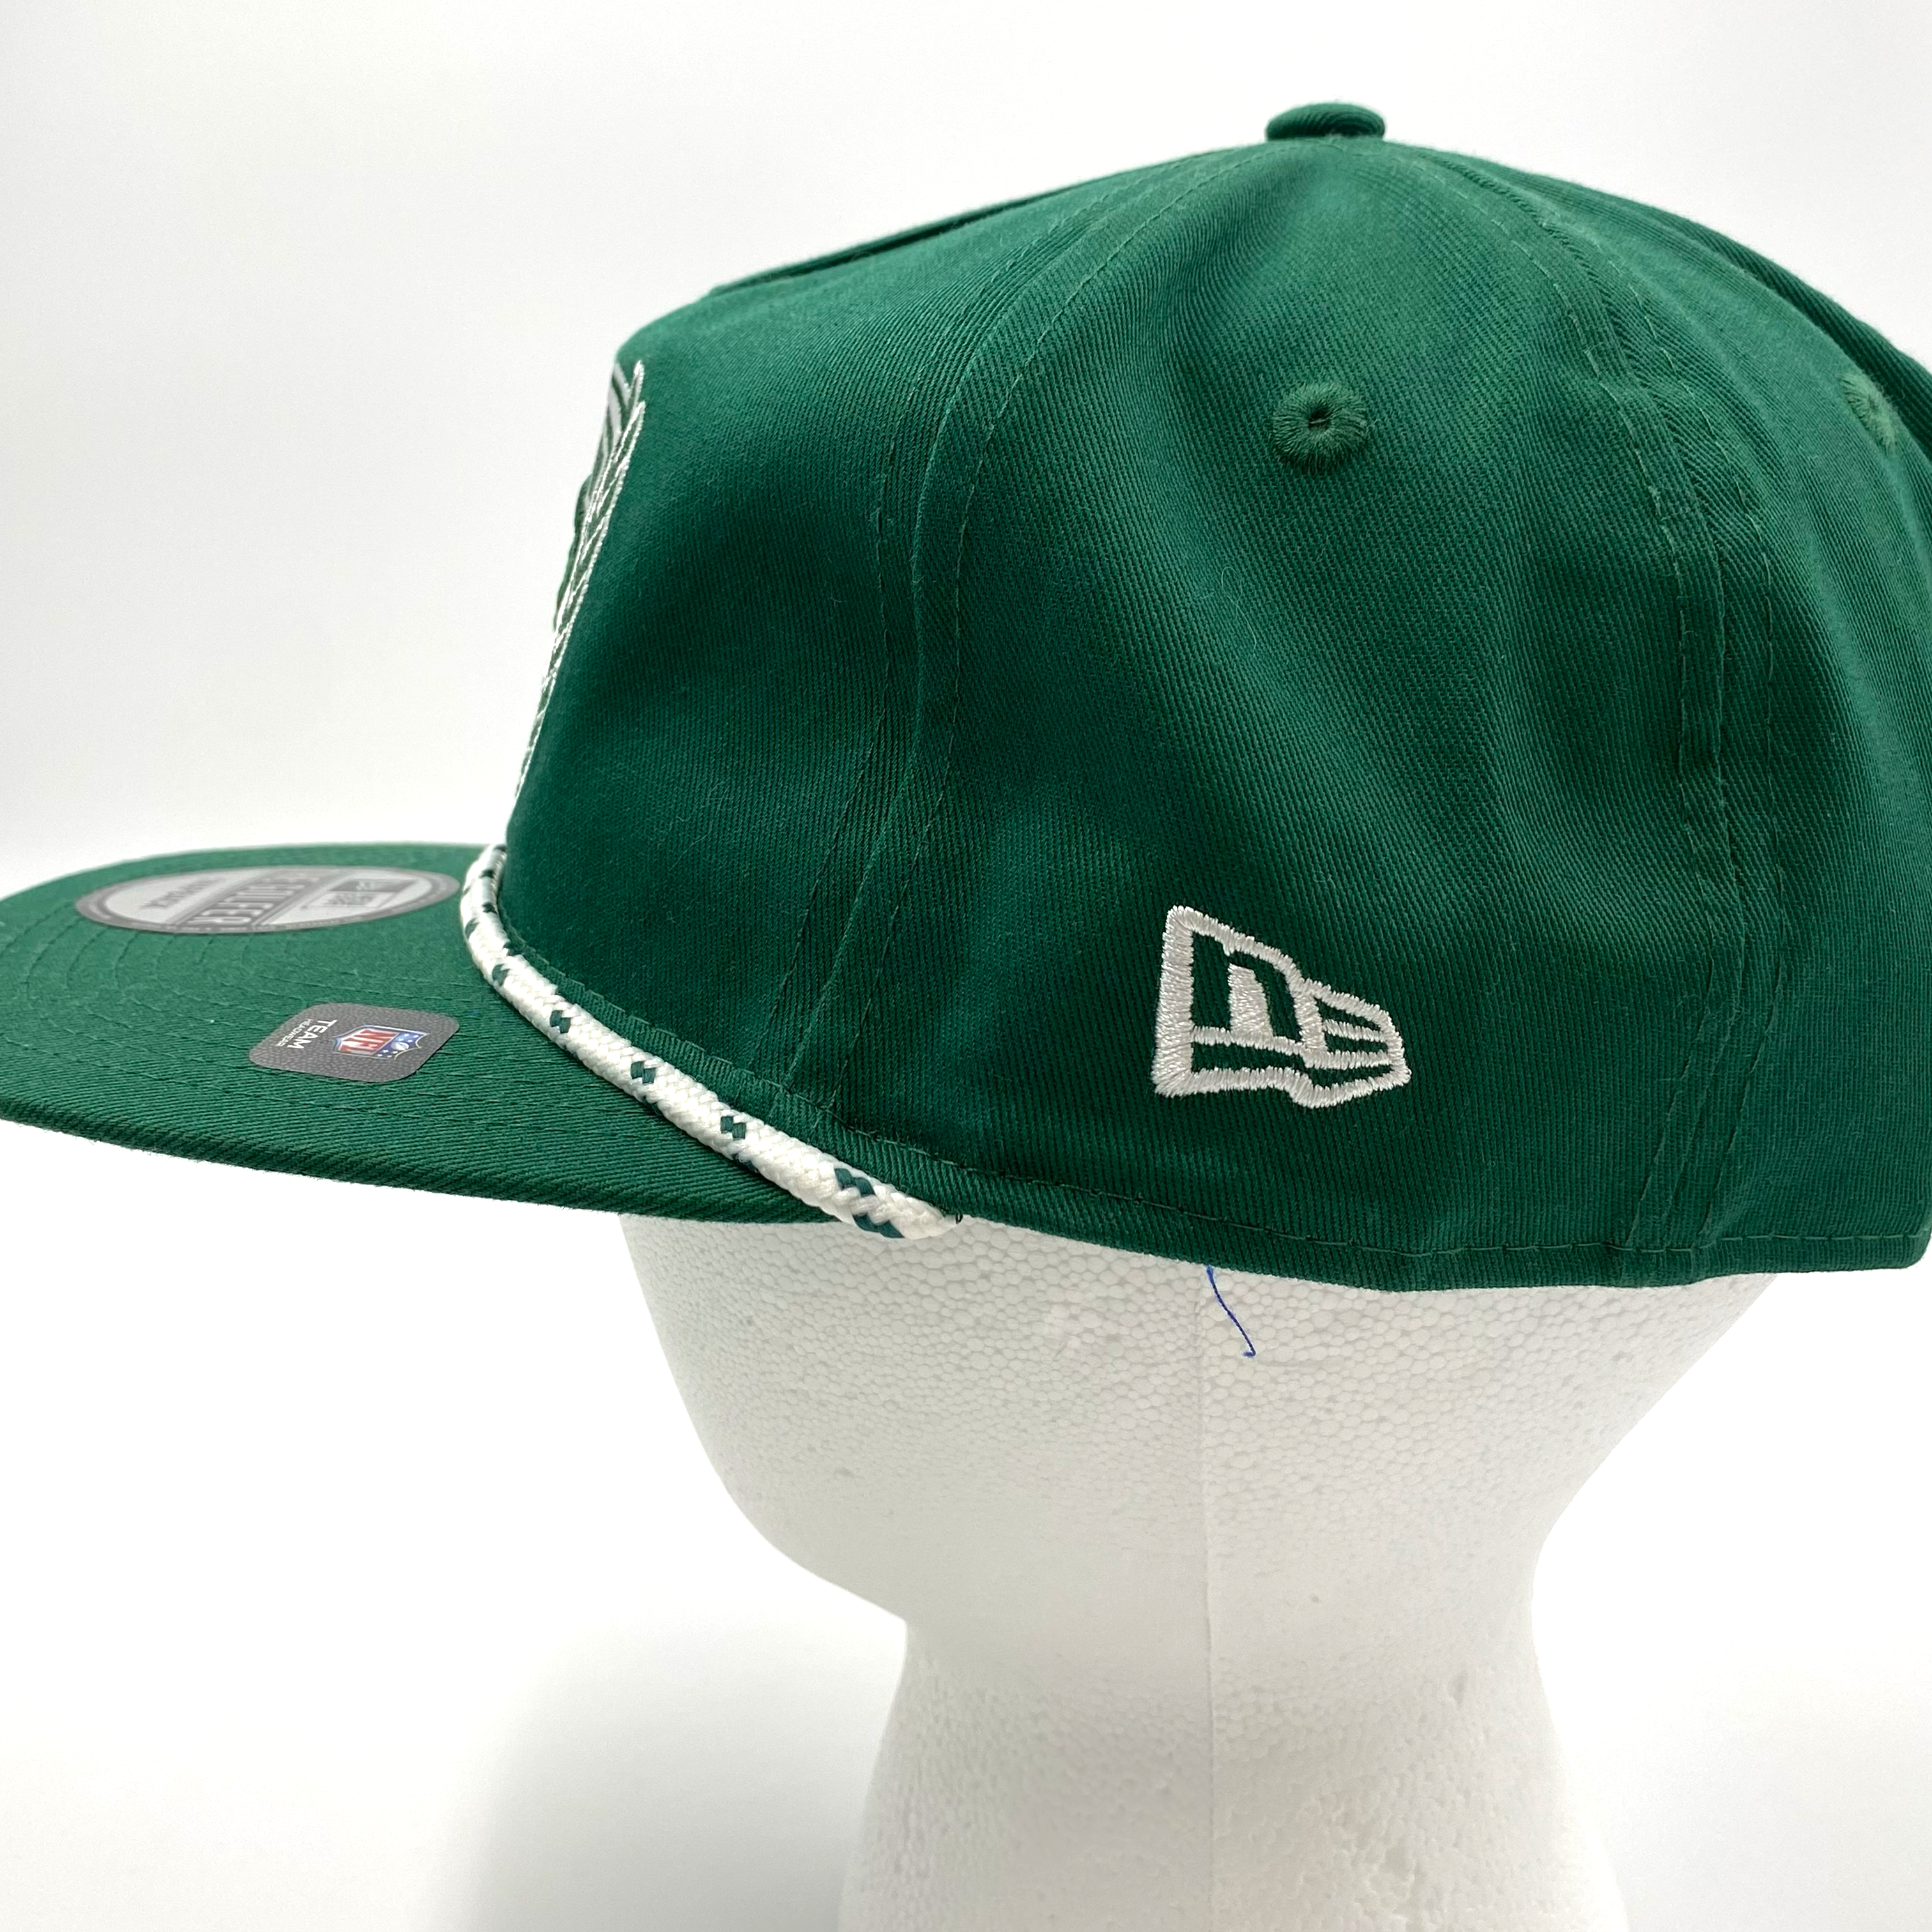 New Era Bills With Crest Green Golfer Snapback Hat